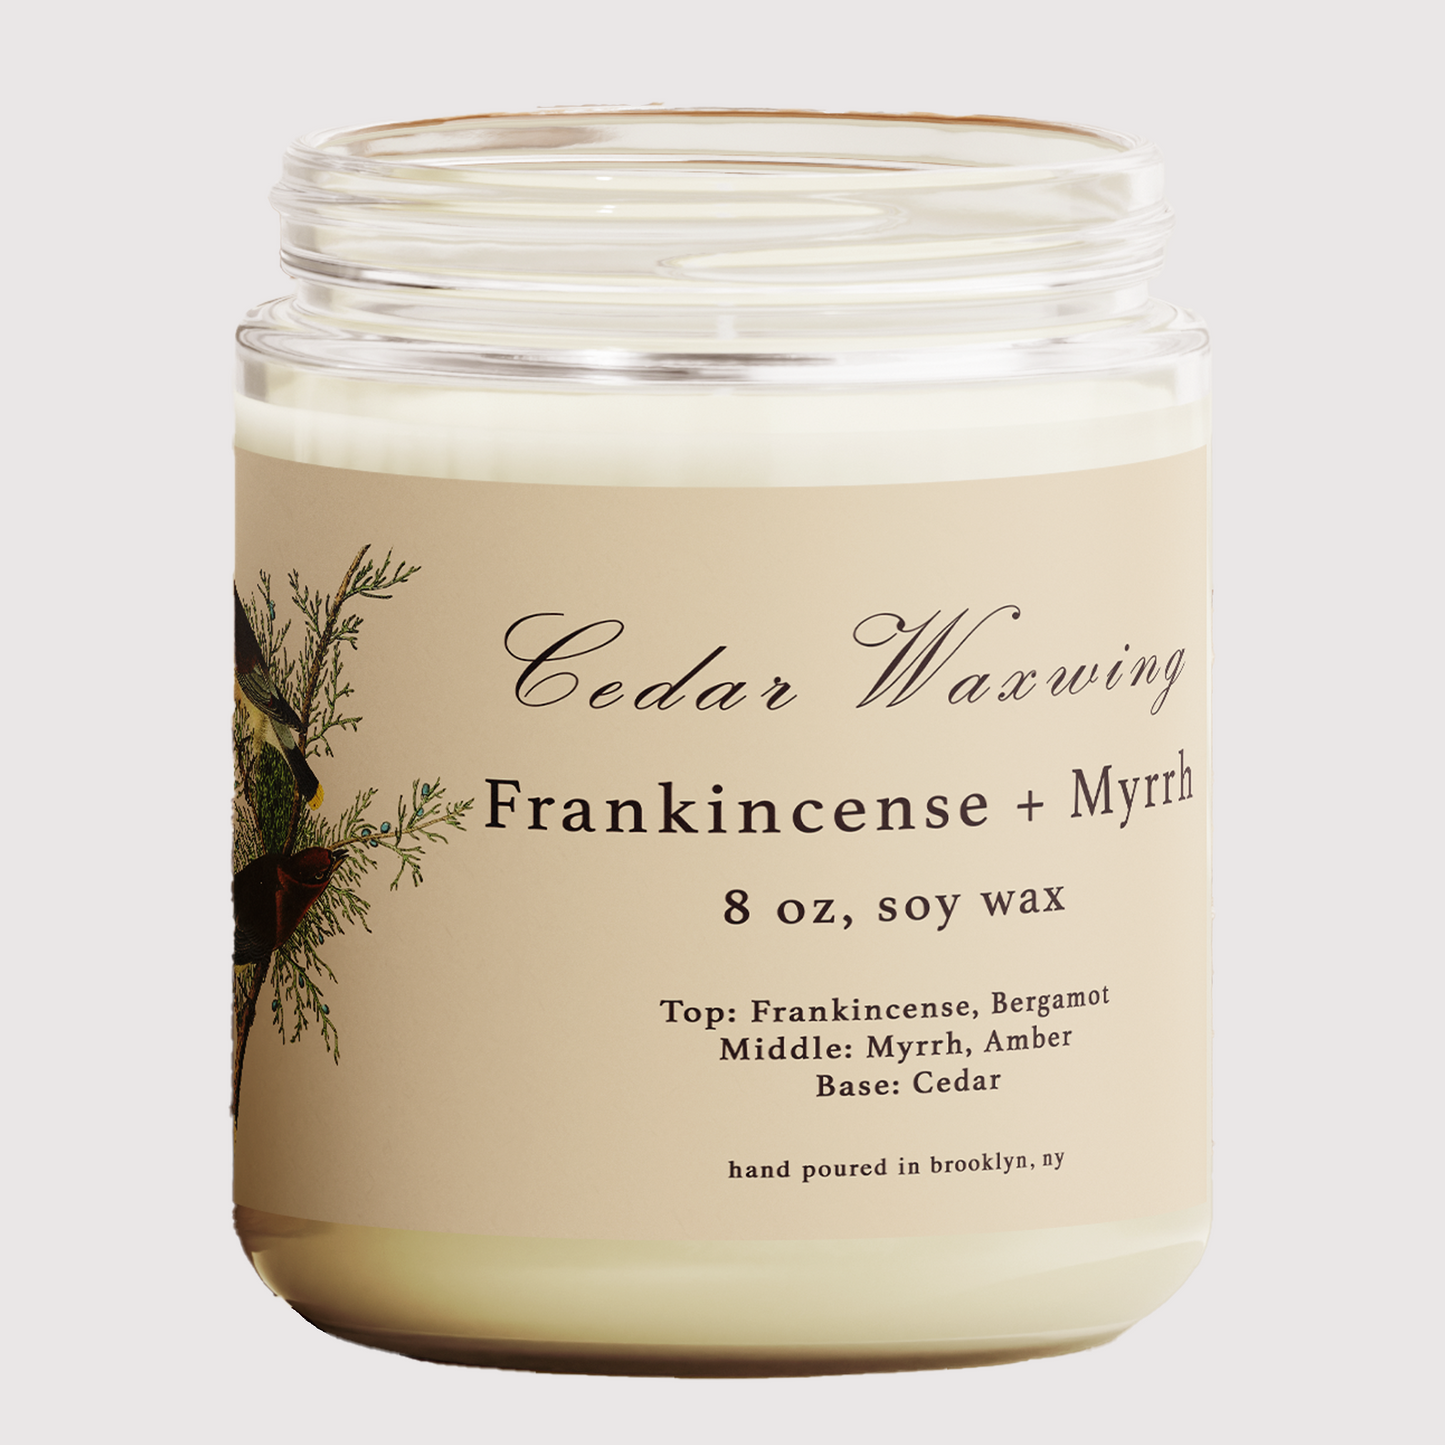 Cedar Waxwing: Frankincense & Myrrh Scented Candle